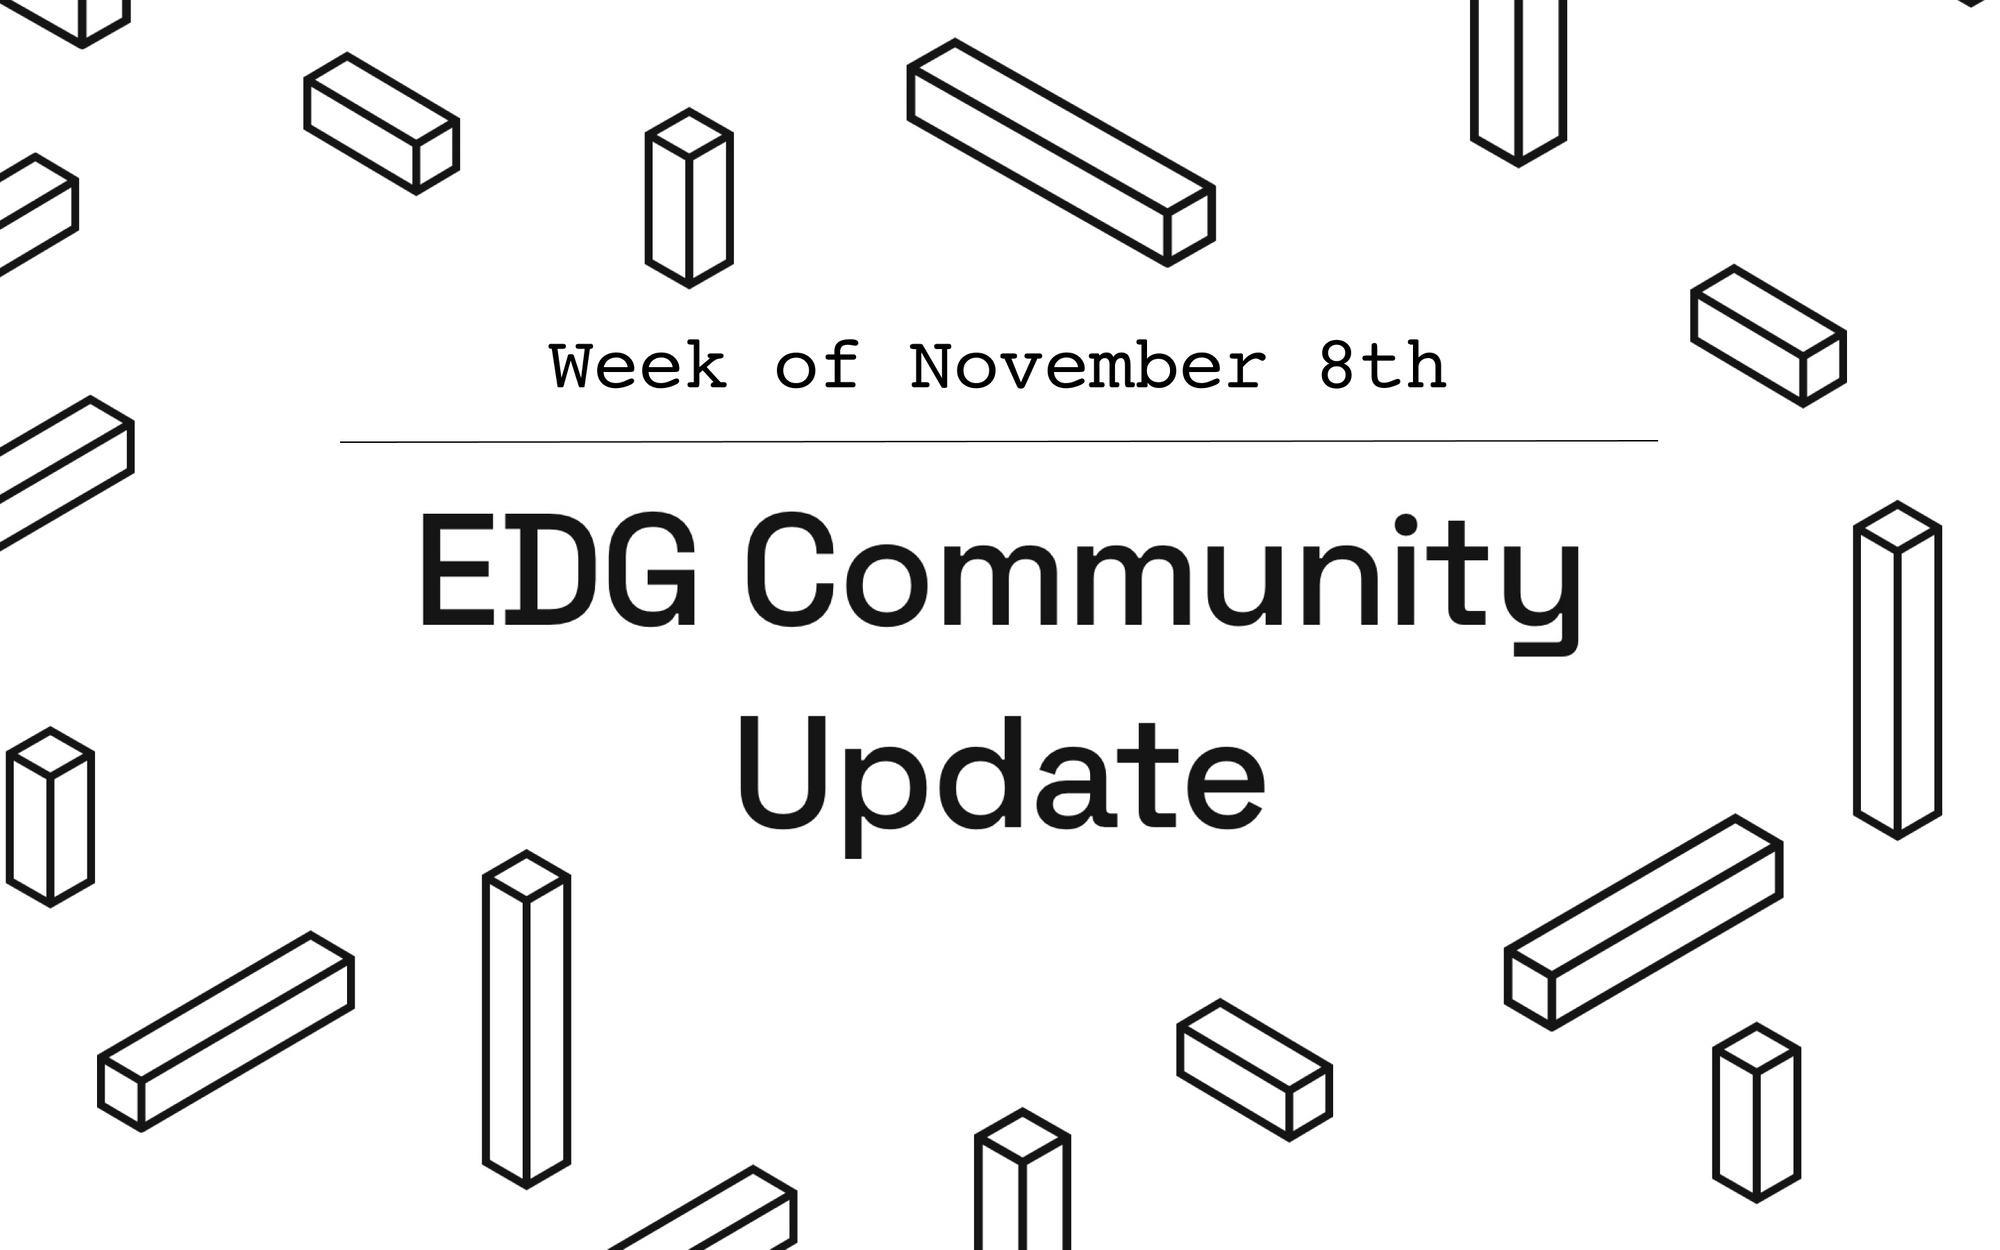 EDG Community Update: Week of November 8th